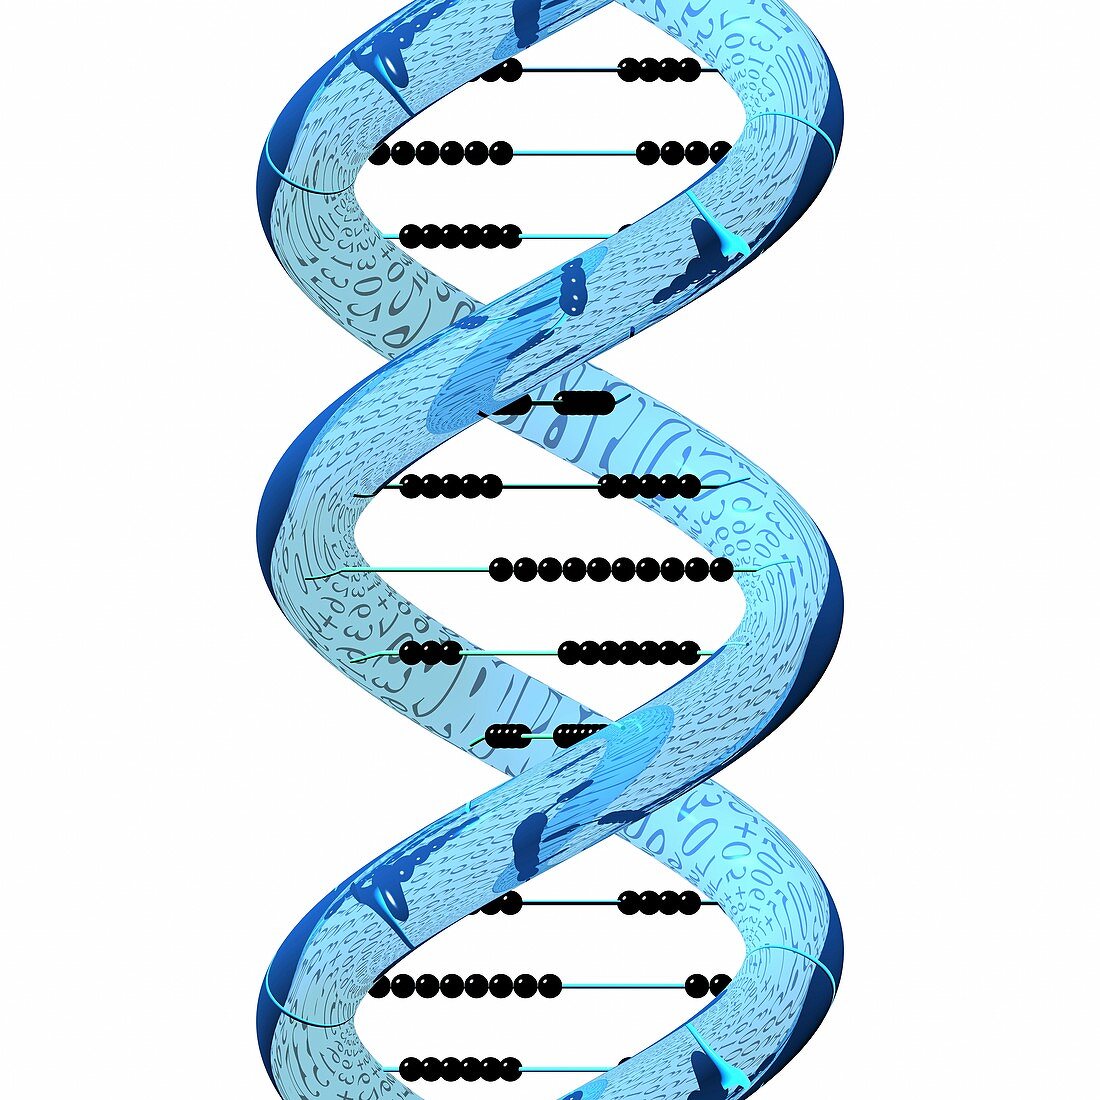 Genetics and mathematics, conceptual image